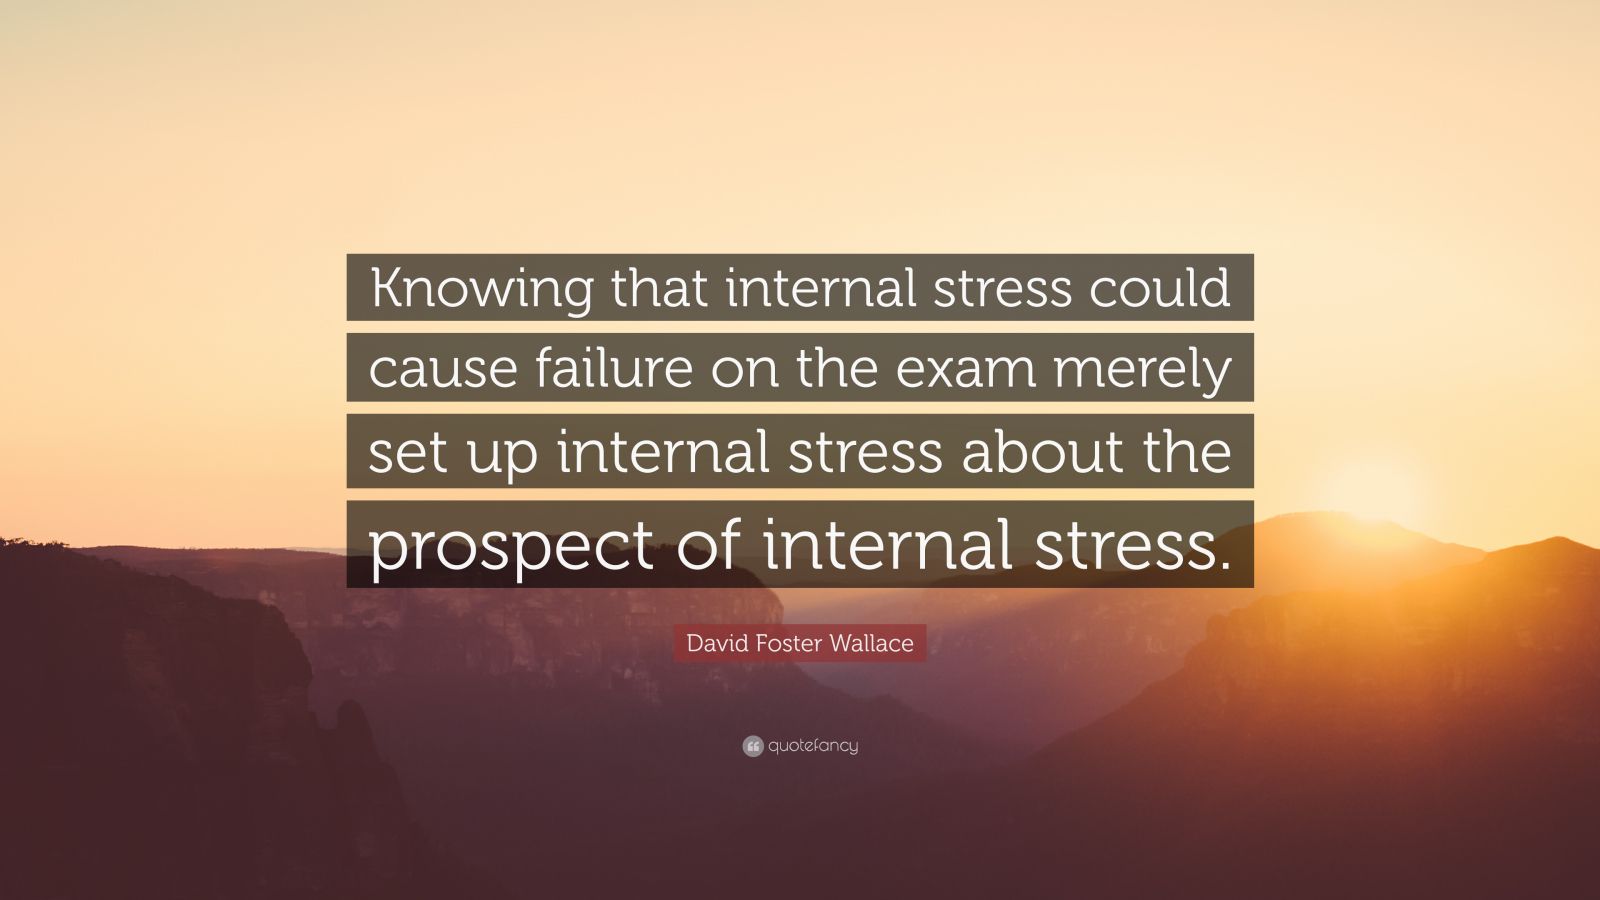 exam stress quotes